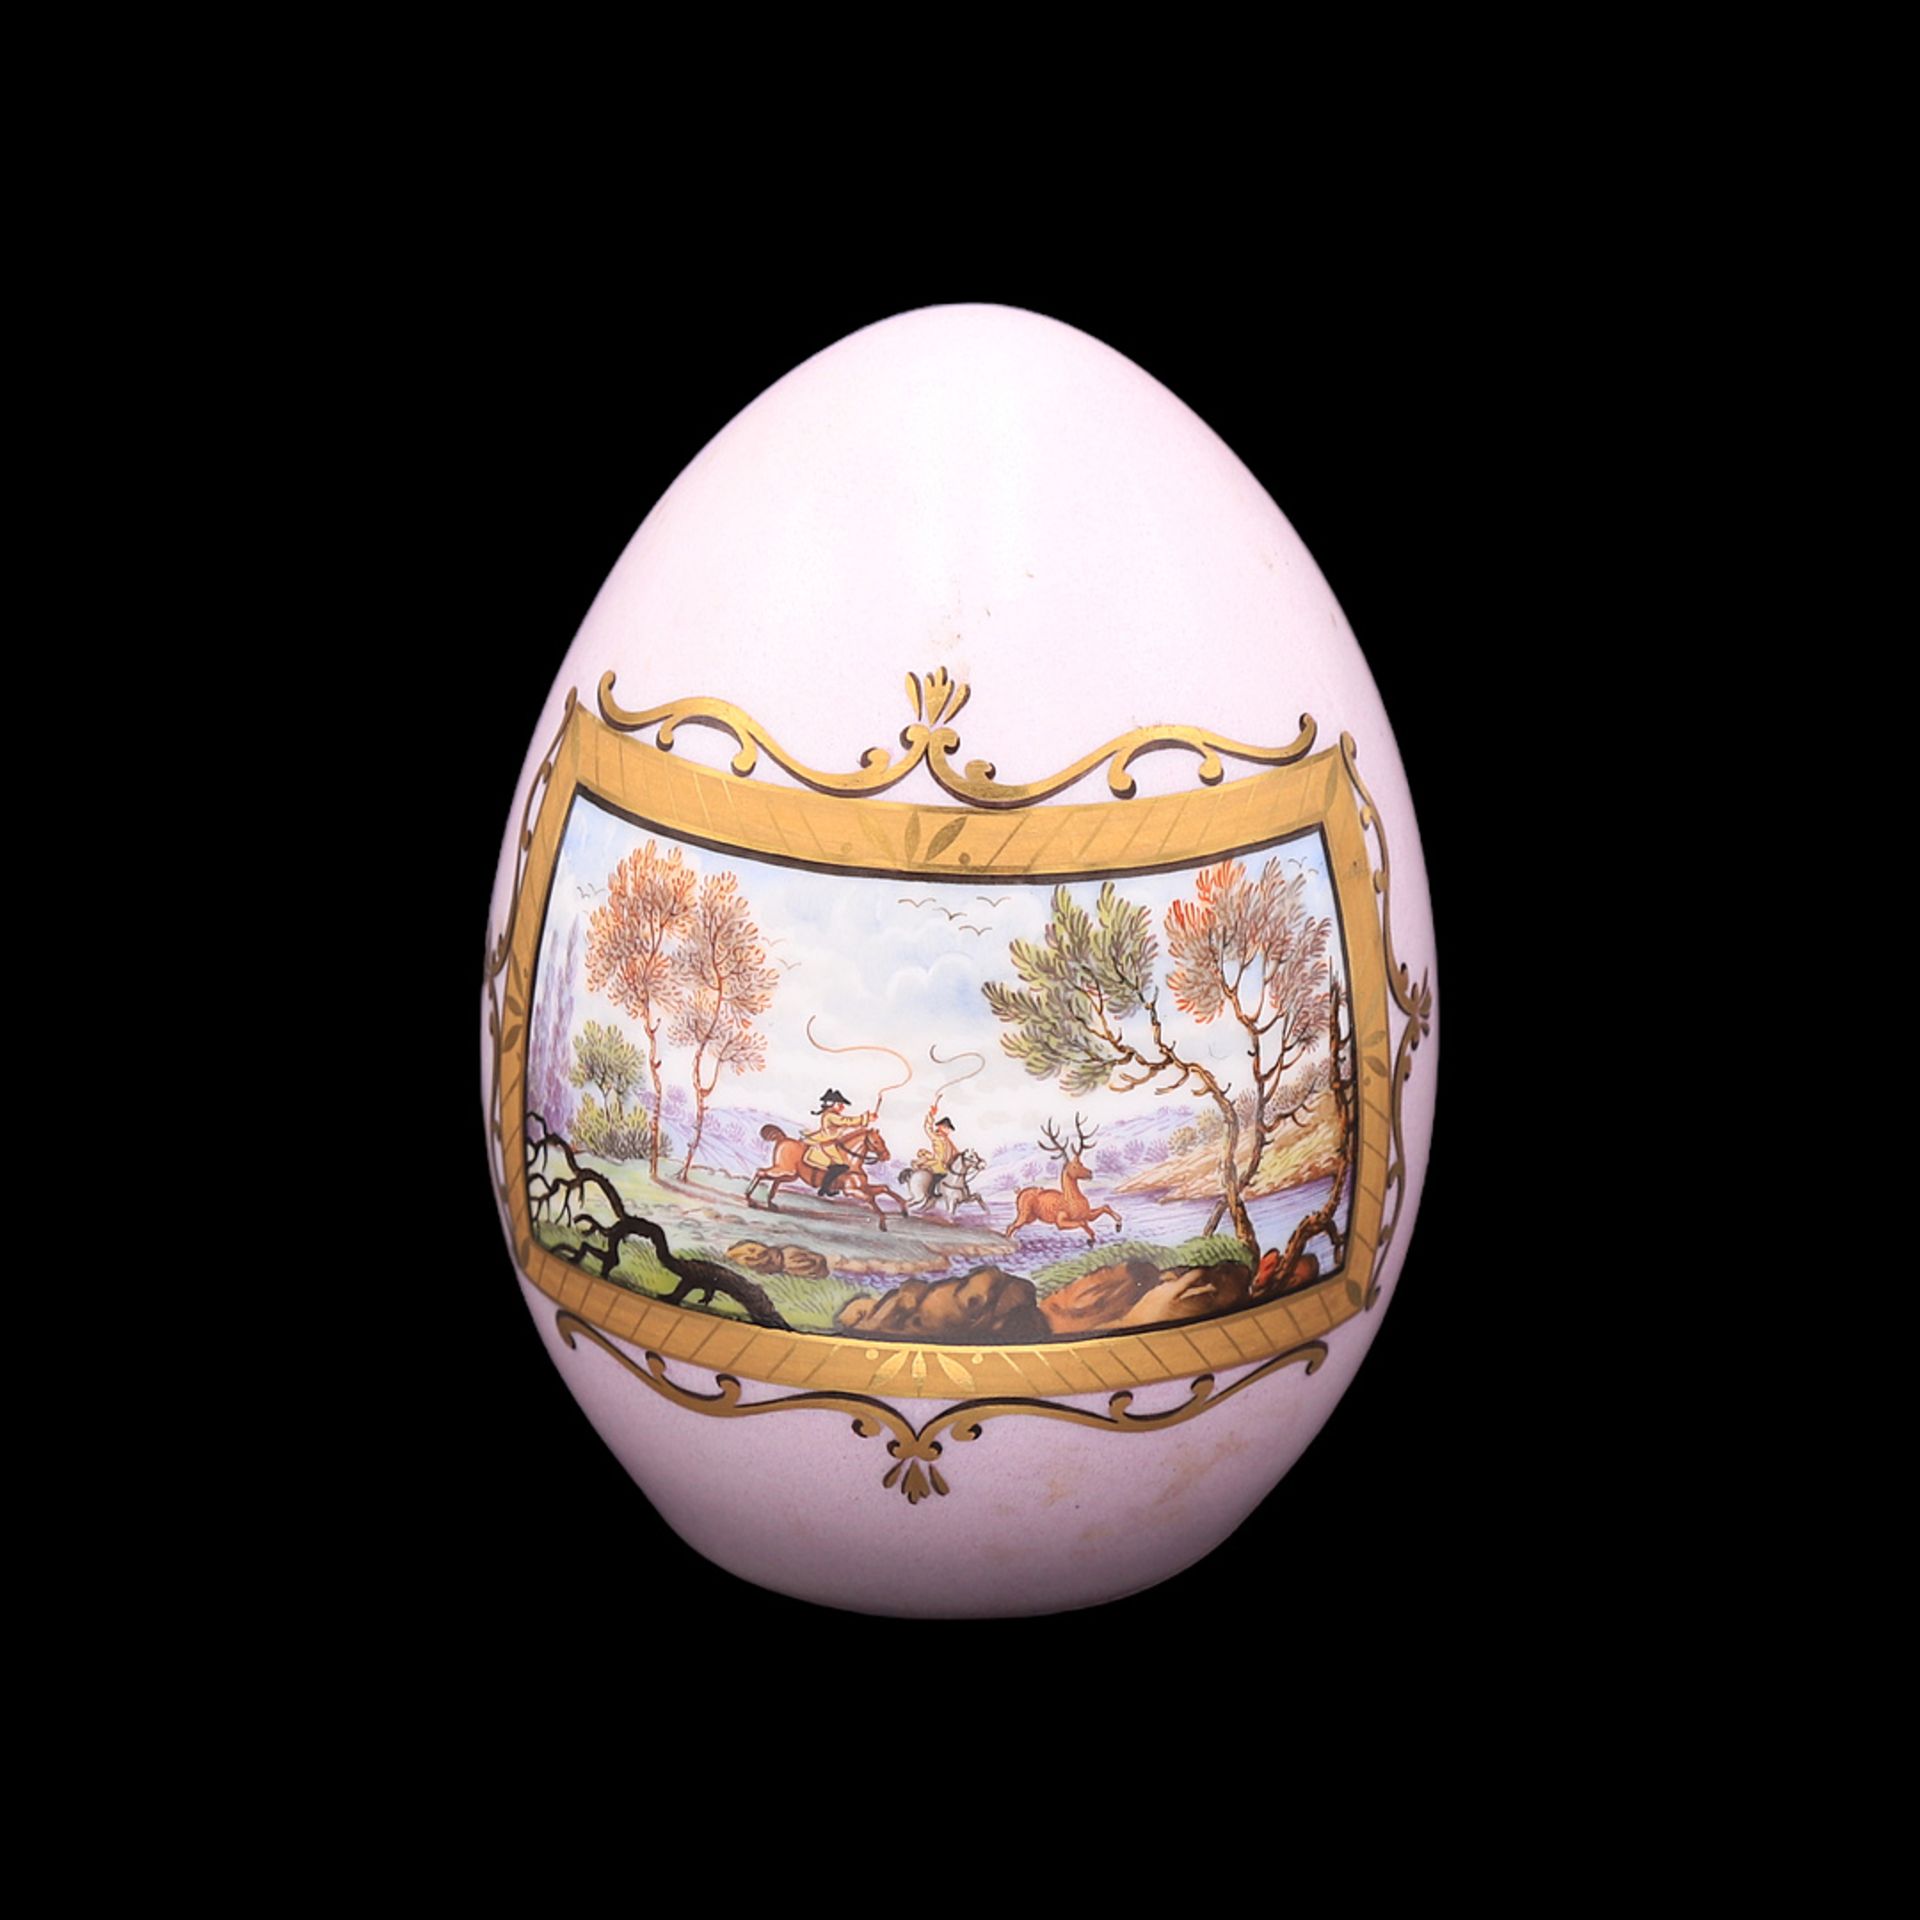 FH Porzellanmanufaktur Ornamental egg with hunting scenery